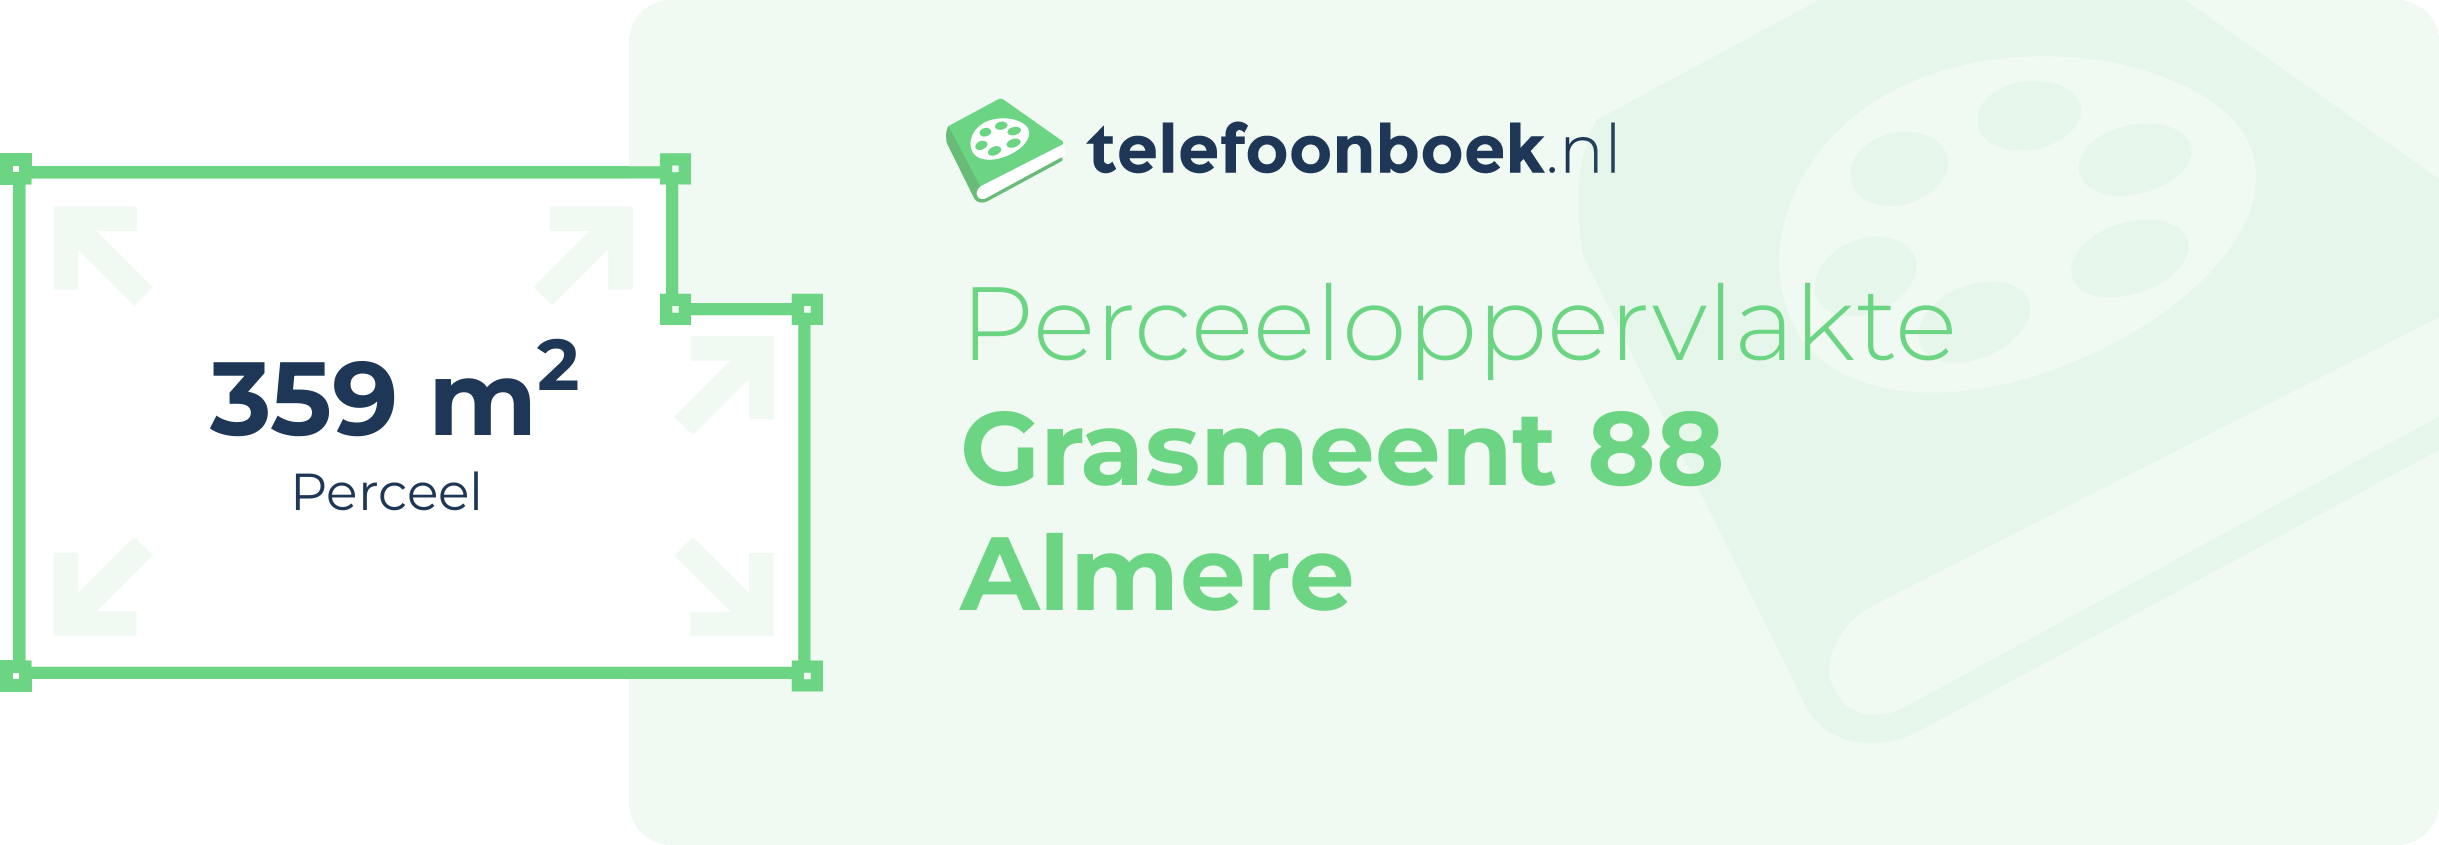 Perceeloppervlakte Grasmeent 88 Almere